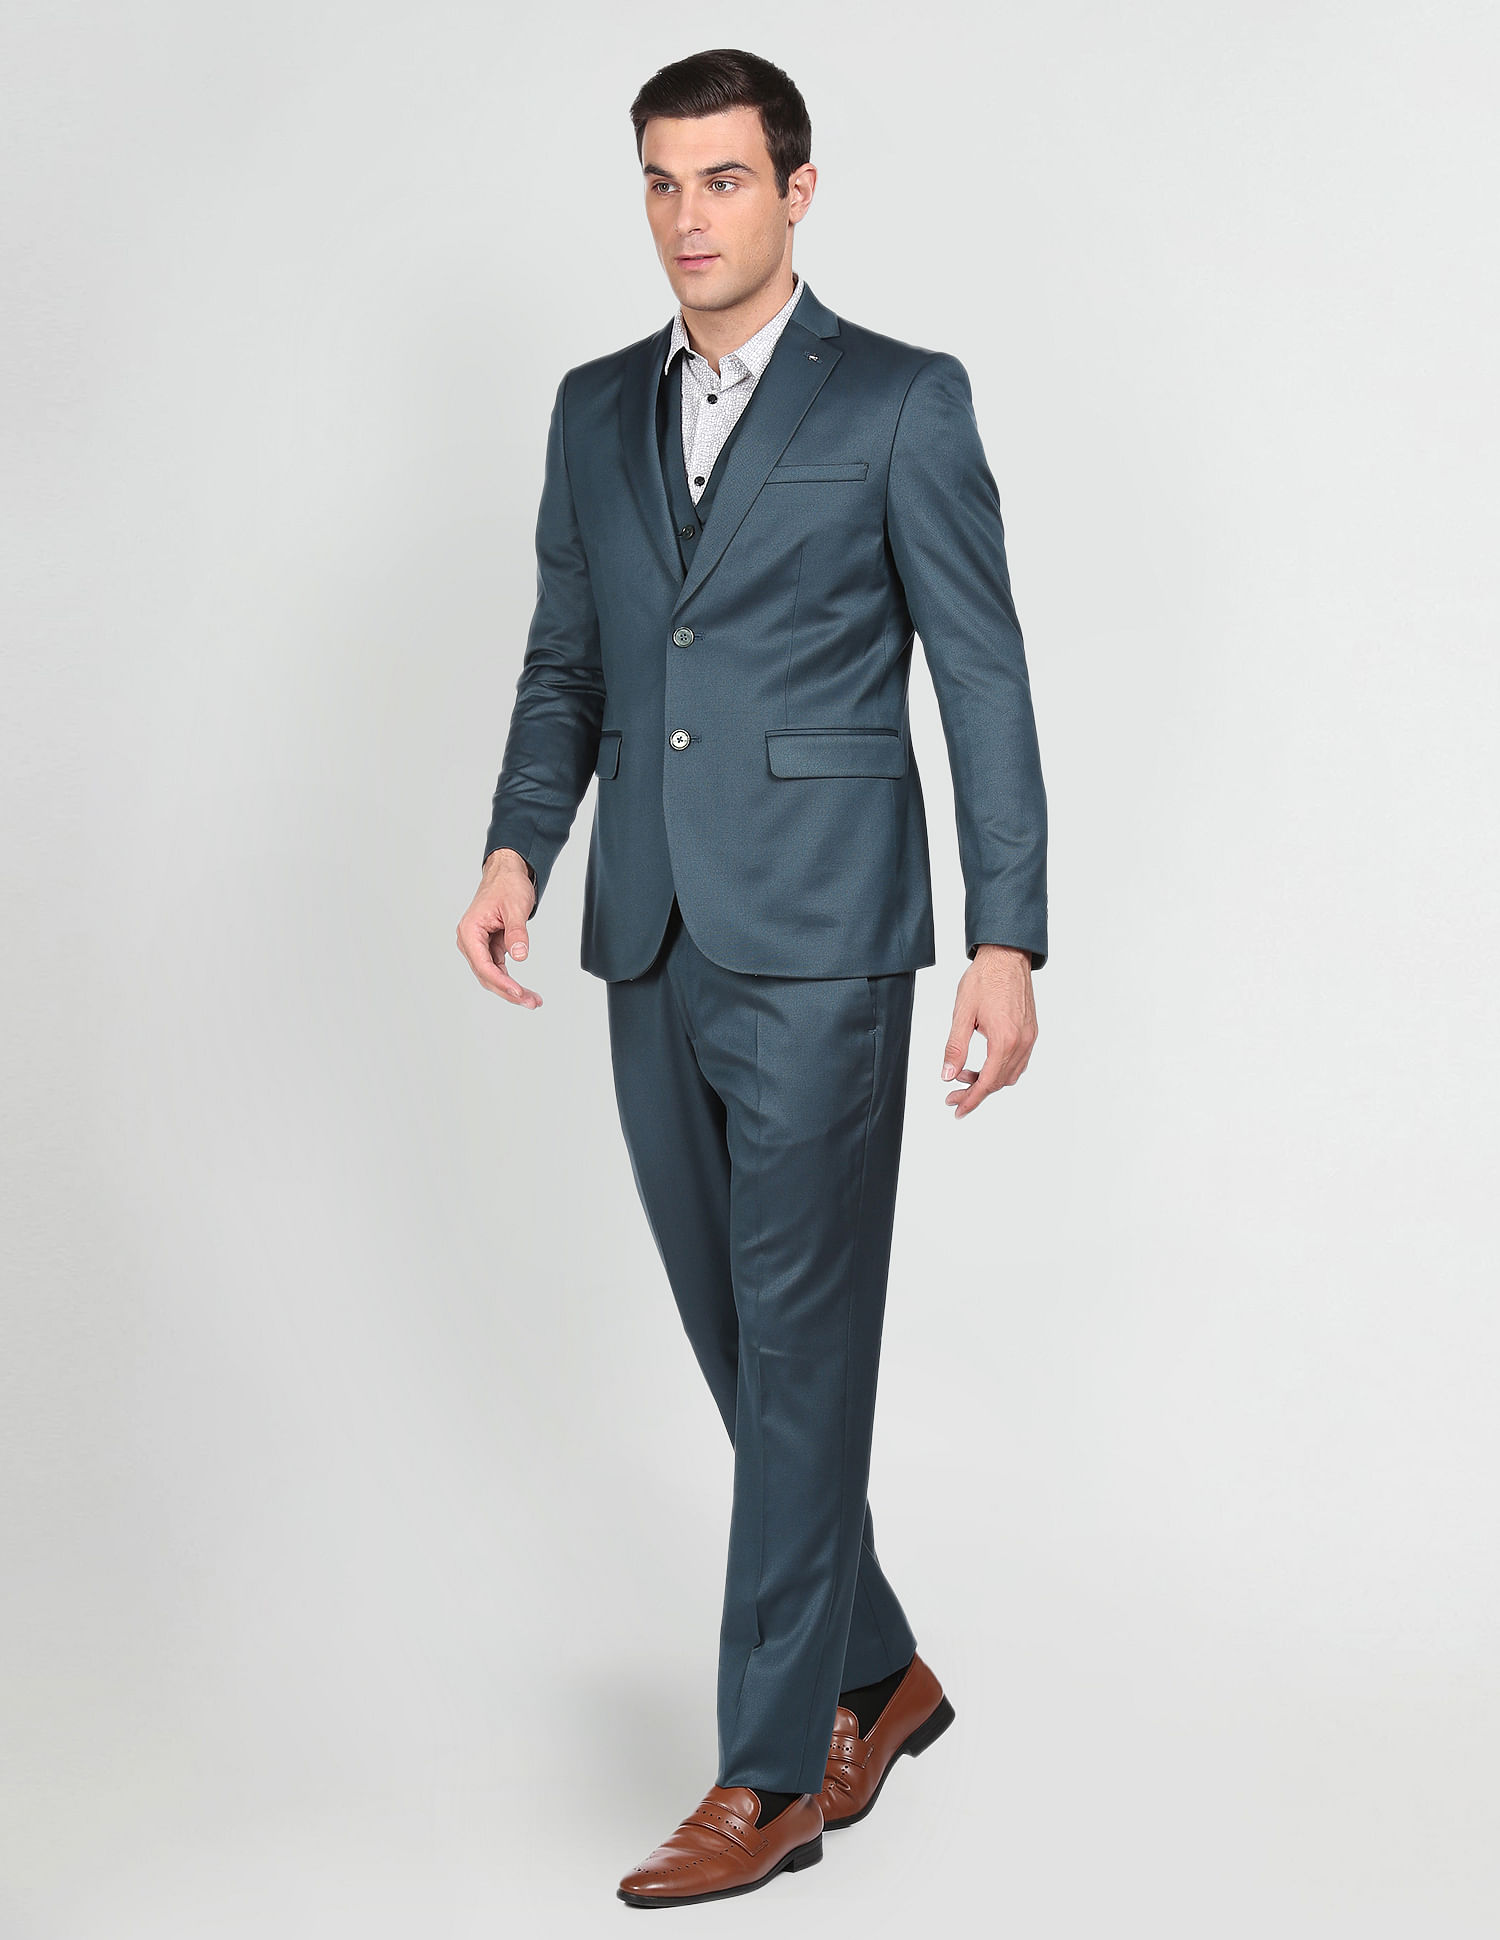 David Beckham wearing Charcoal Waistcoat Grey Dress Shirt Charcoal Dress  Pants Black Tie  Lookastic